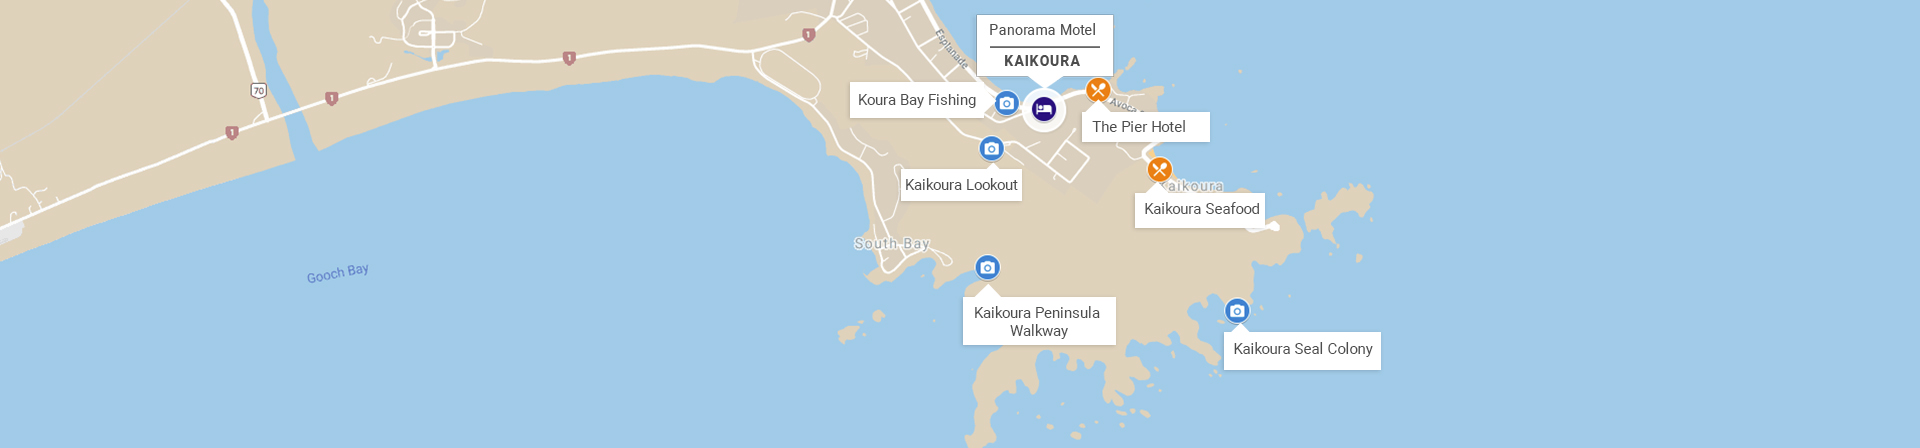 KaiKoura Motel Location